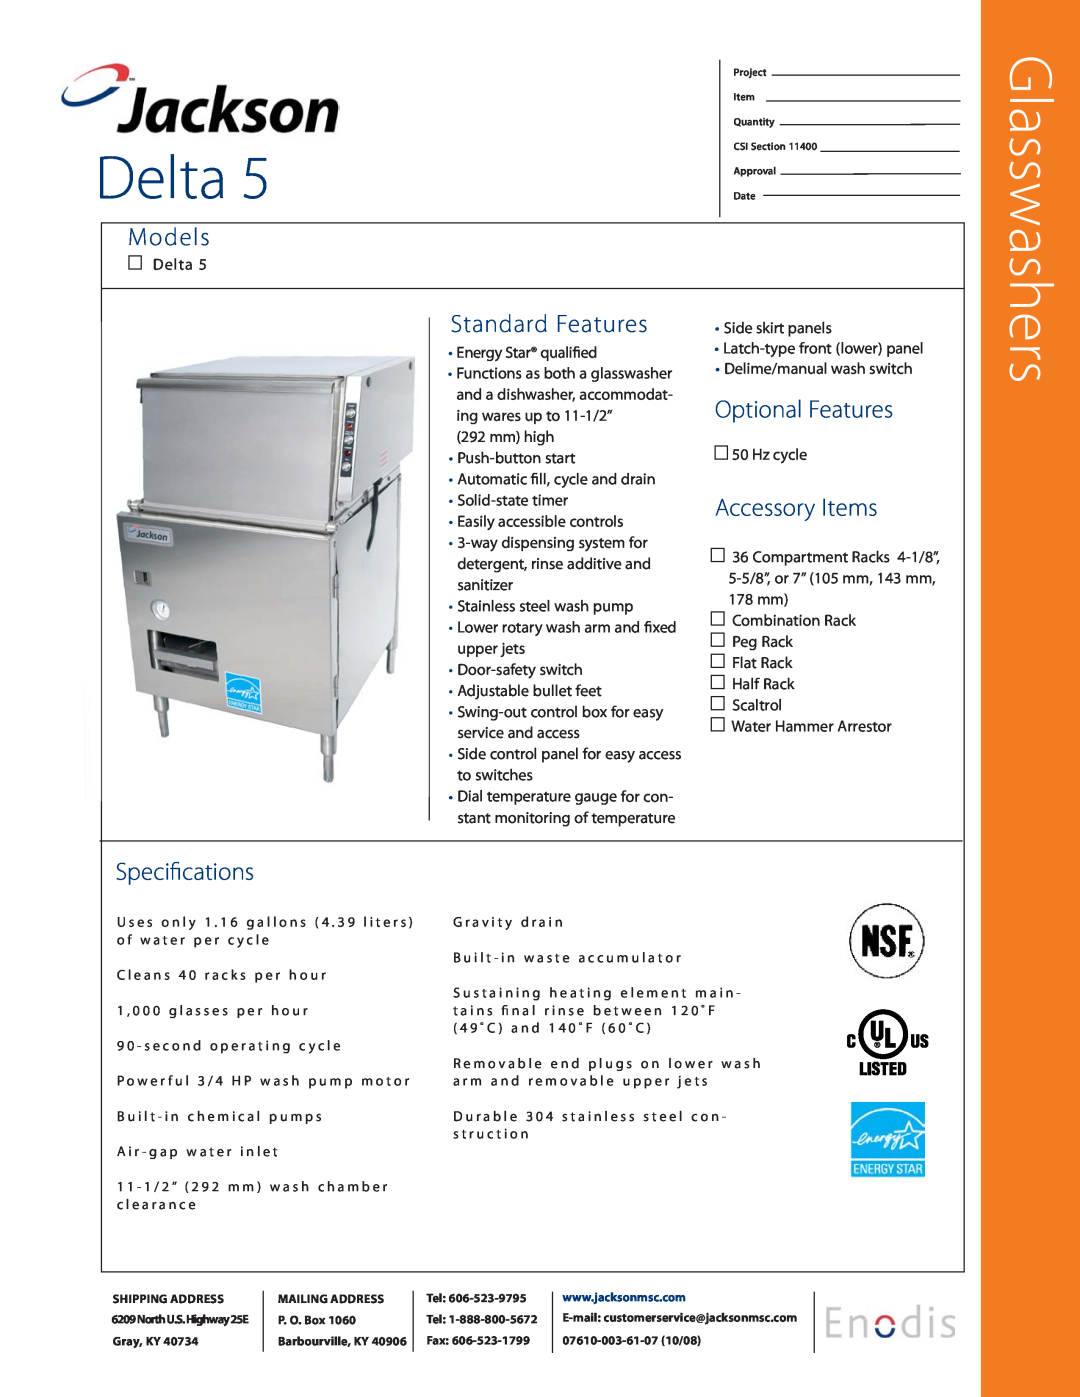 Jackson DELTA 5 D technical manual Installation/Operation & Technical Manual, For Jackson Models, Delta Delta 5 D 